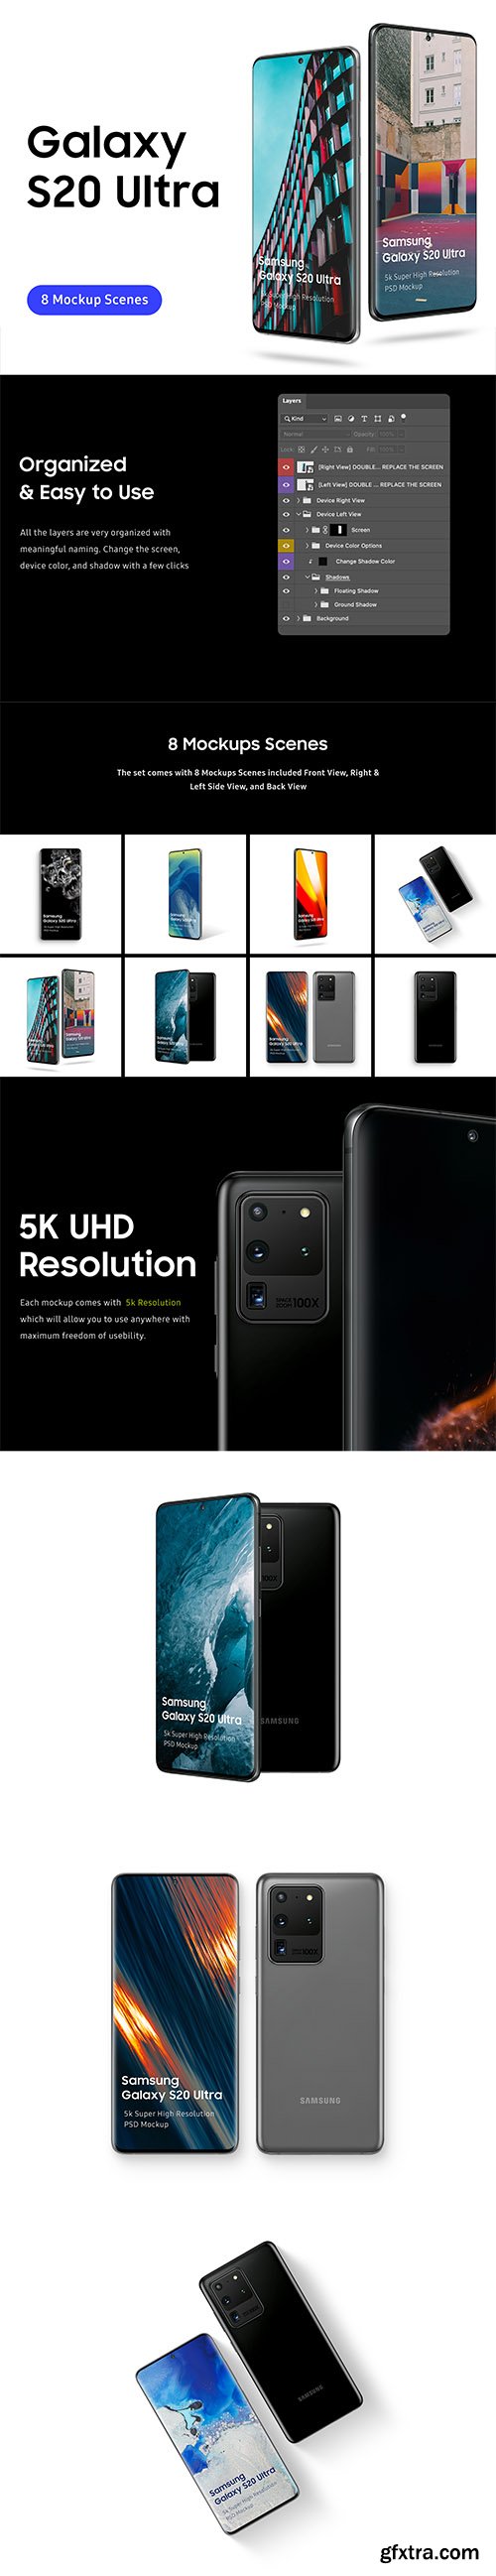 Samsung Galaxy S20 Ultra Mockup